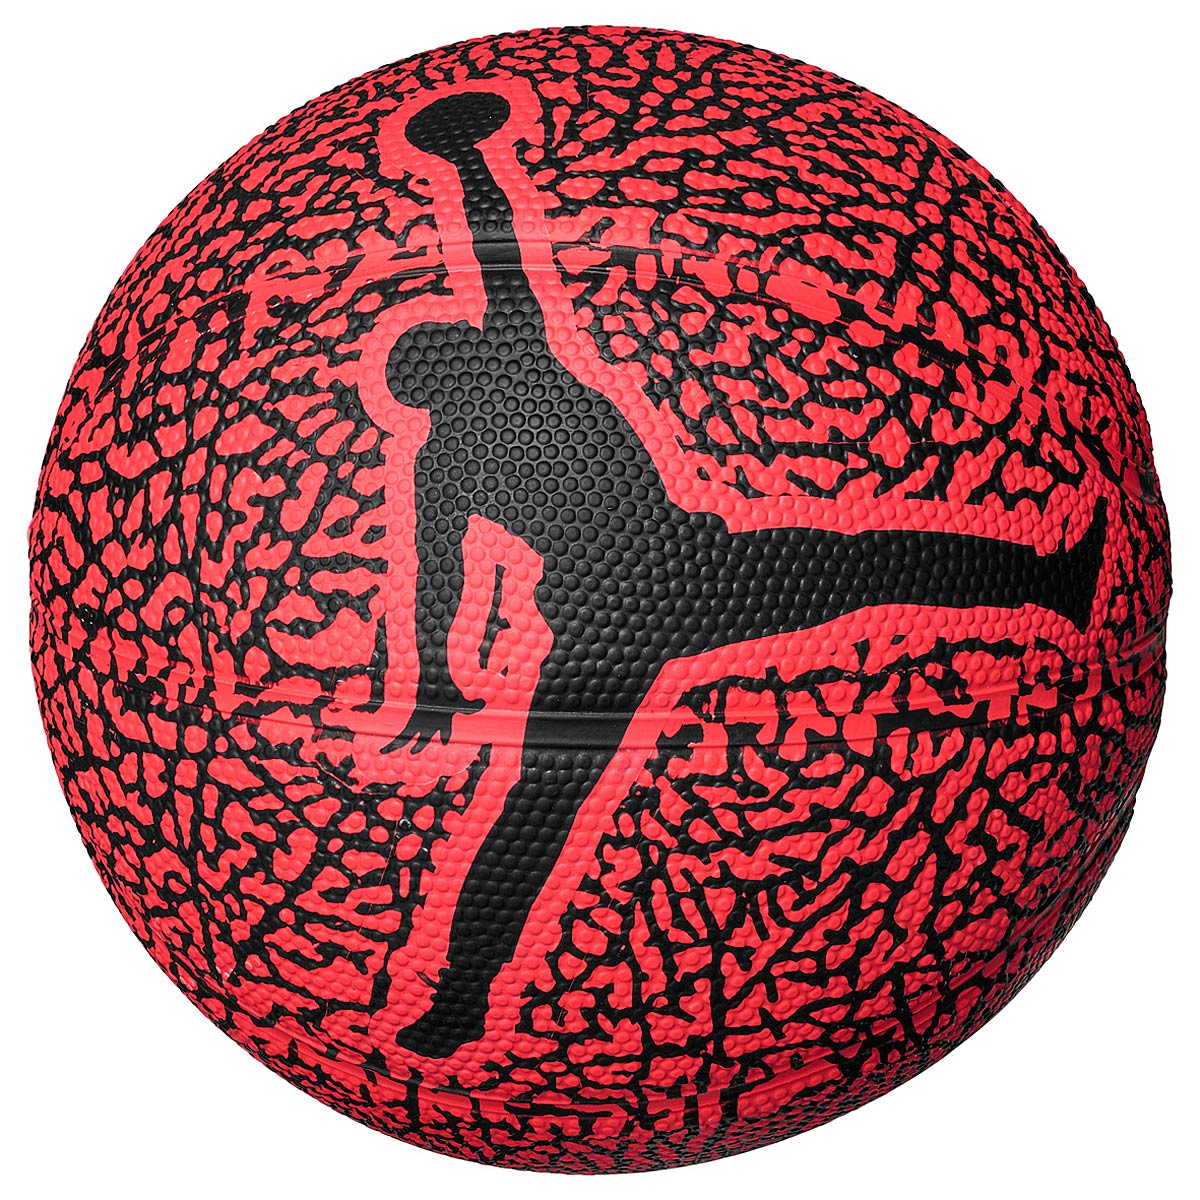 Nike Skills 2.0 Graphic Basketball, Infrared 23/Black/Infrared 23/Black